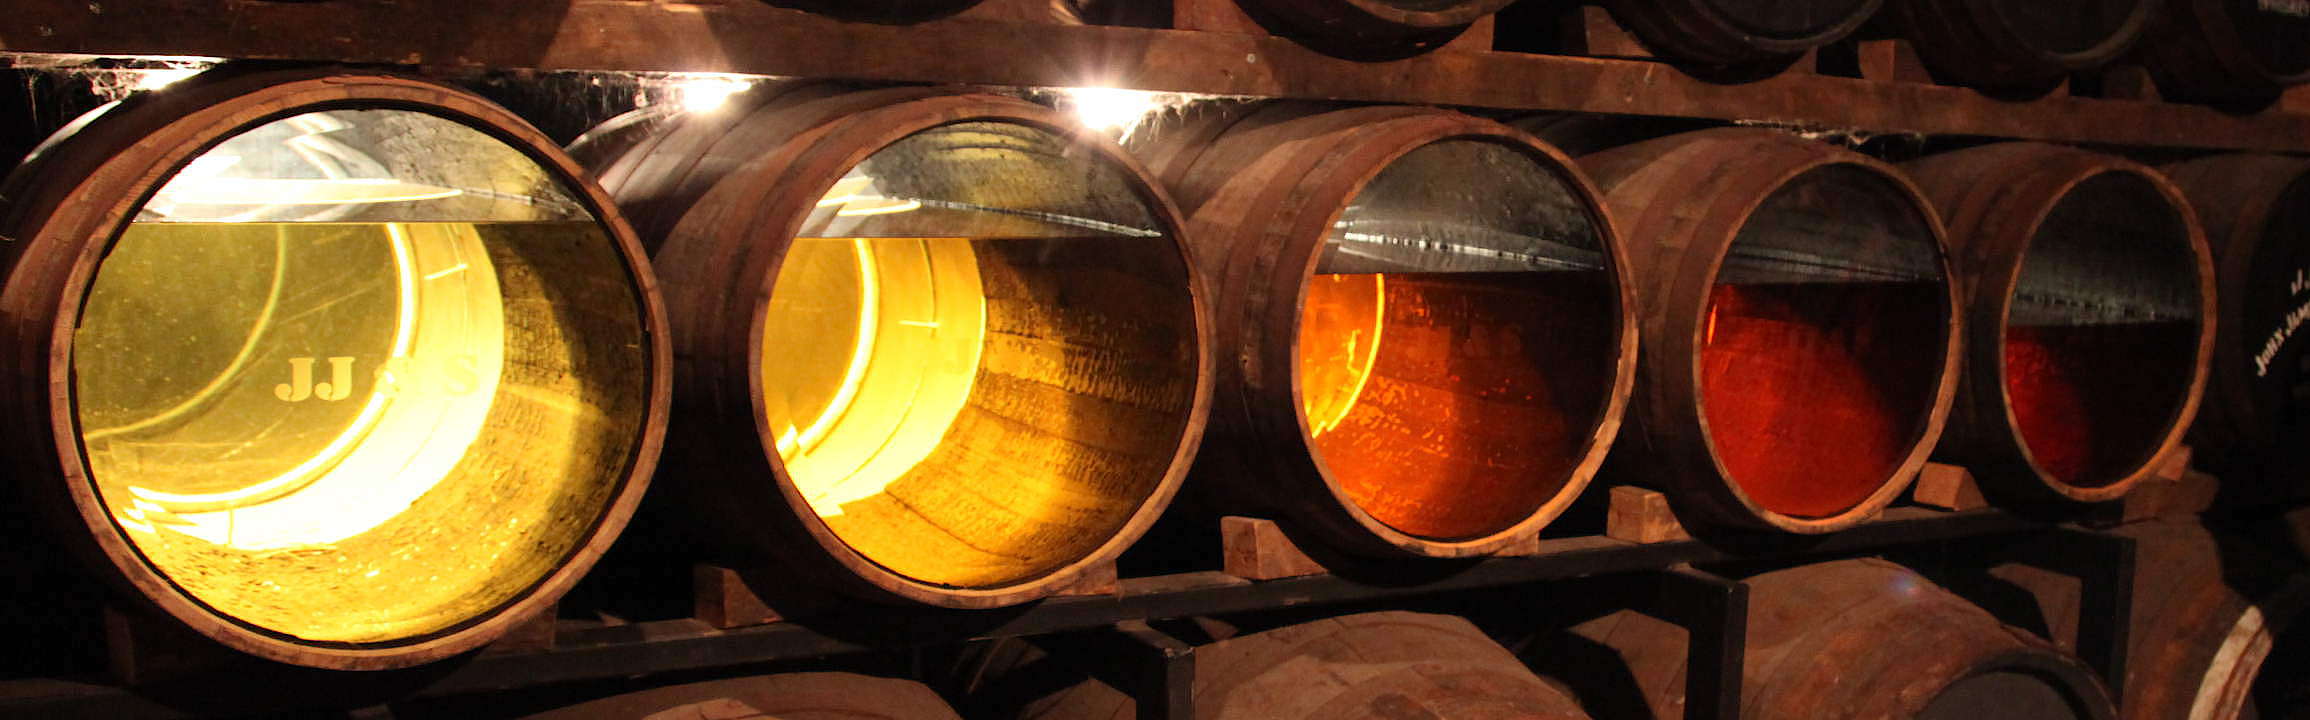 TAN 3 Litri Botti di Whisky Botte di Vino Barile di Legno Botte di Rovere Botte di Liquore Botte di Whisky 